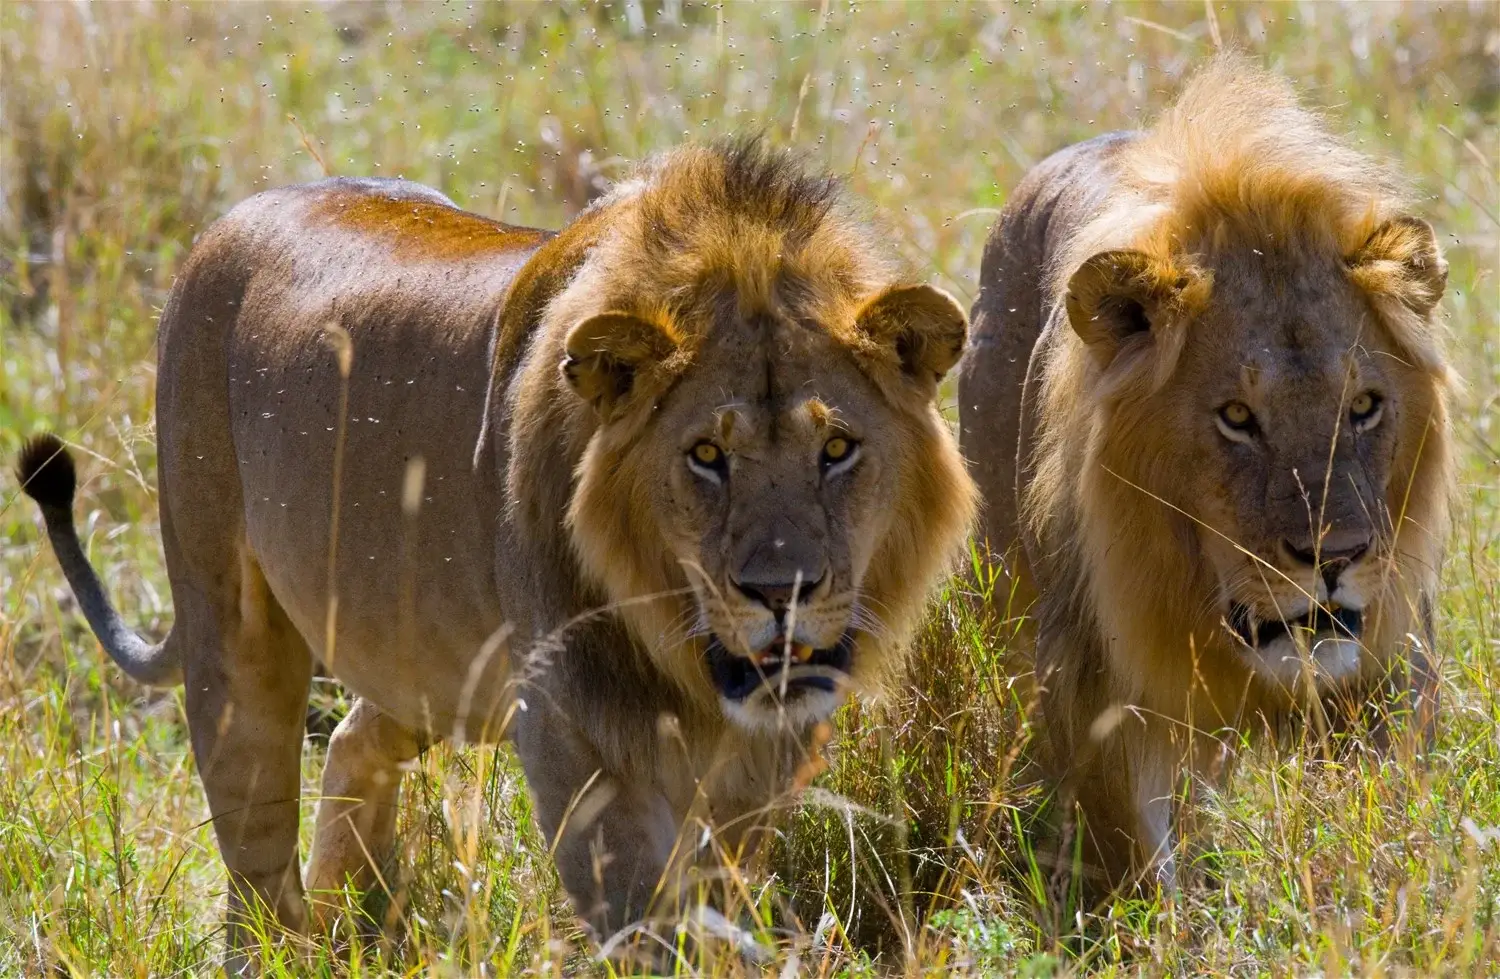 Spending Your Kenya Holidays at the Masai Mara - Two Male Lions at the Masai Mara